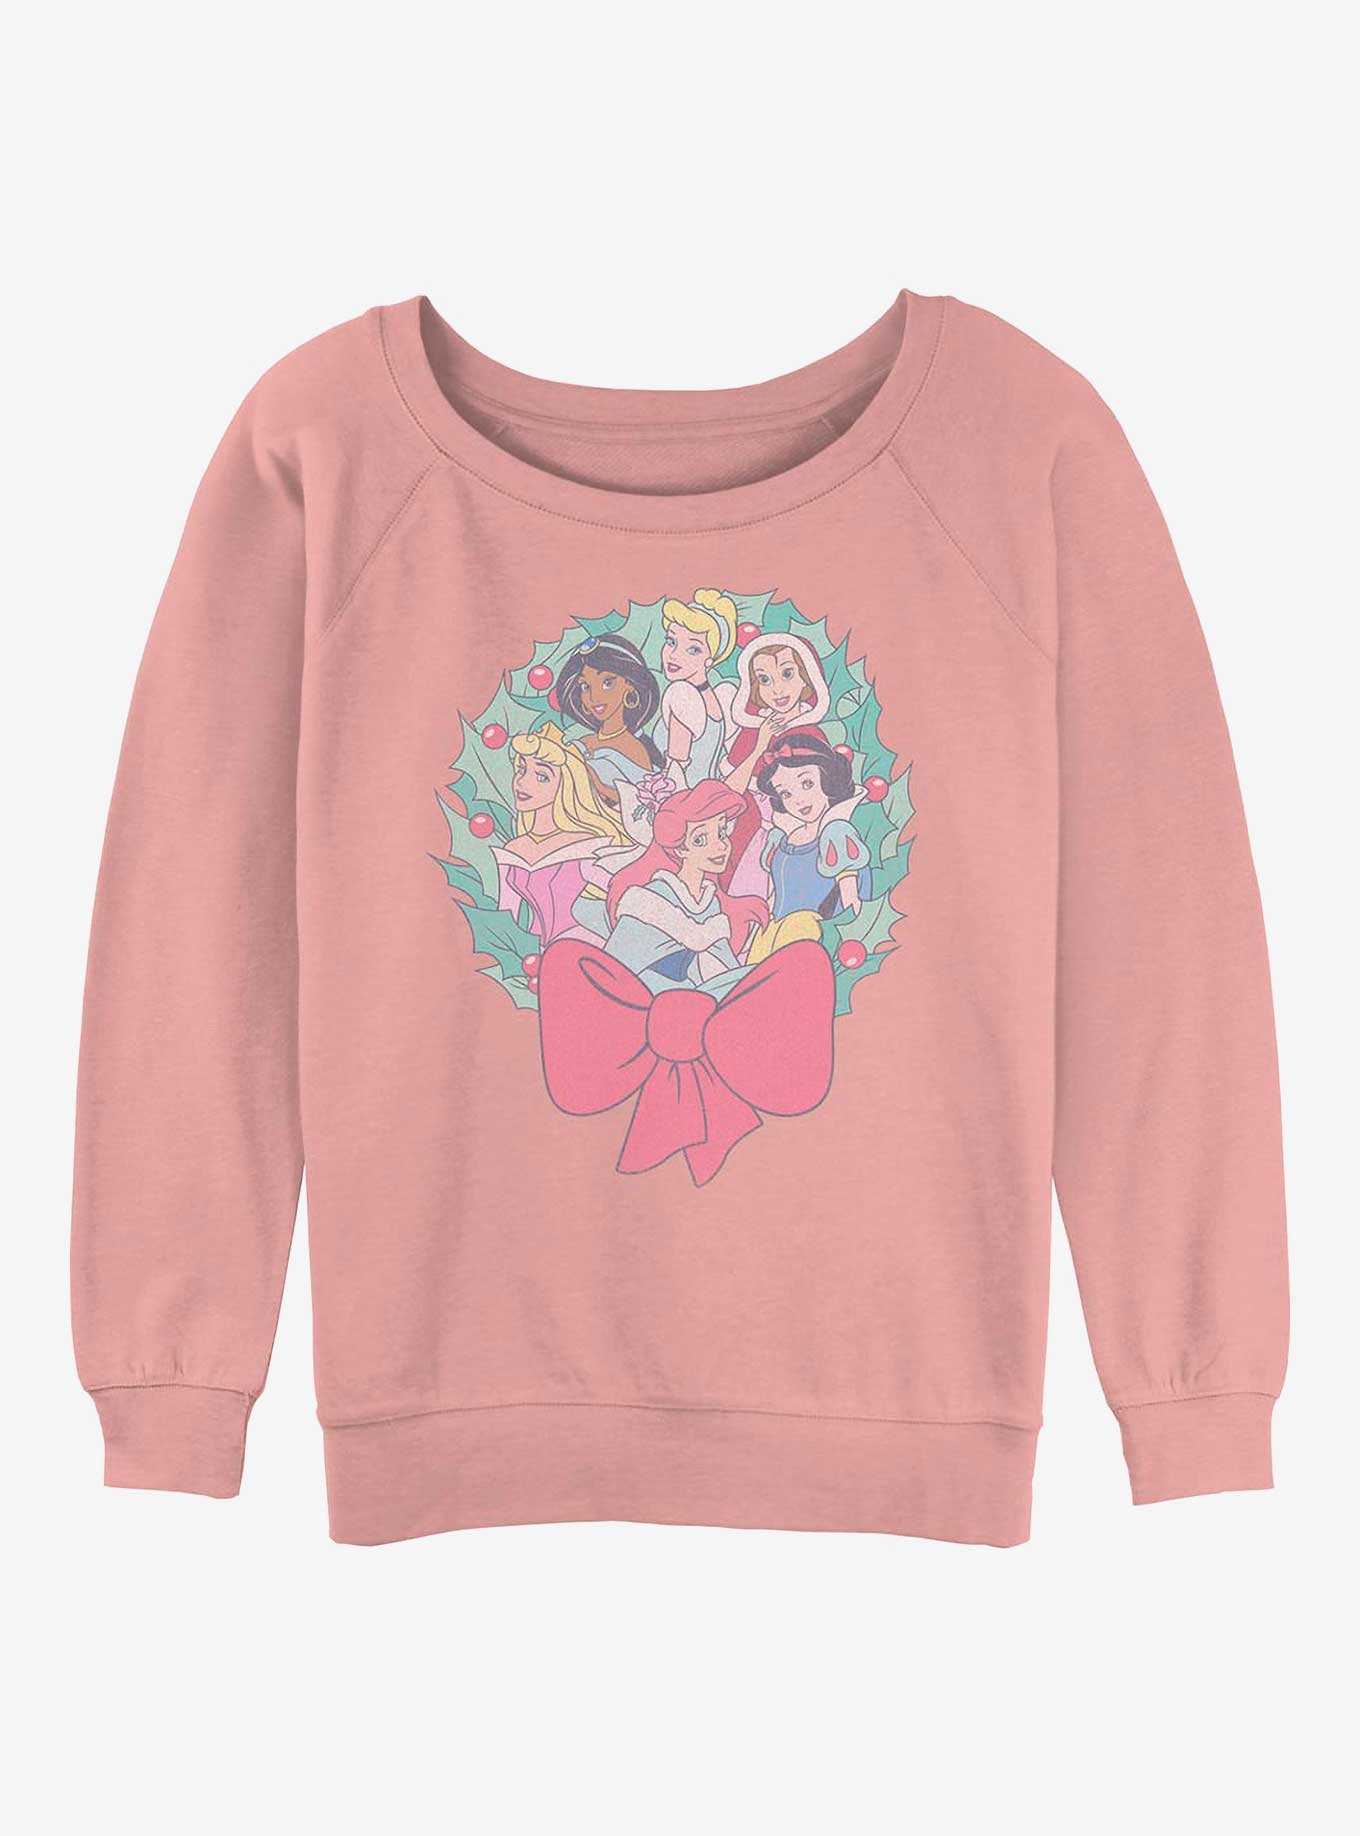 Disney Princesses Holiday Wreath Girls Slouchy Sweatshirt, , hi-res